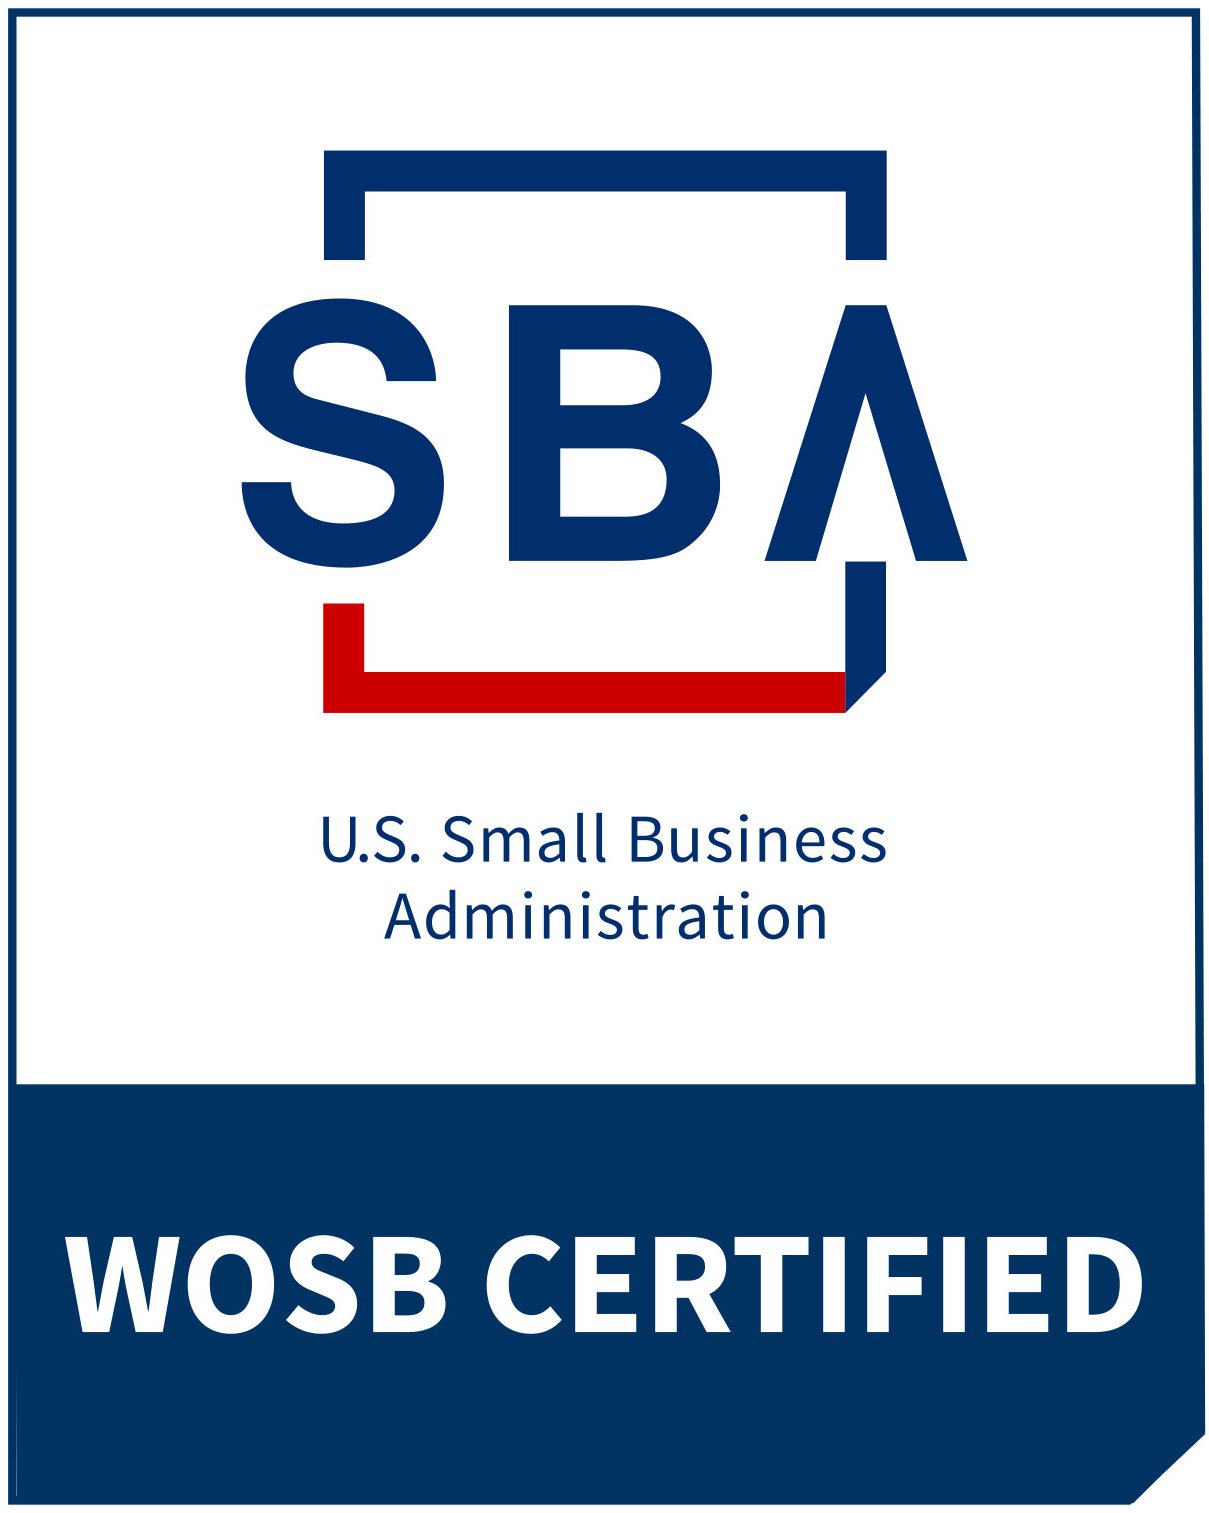 WOSB Certified.jpg